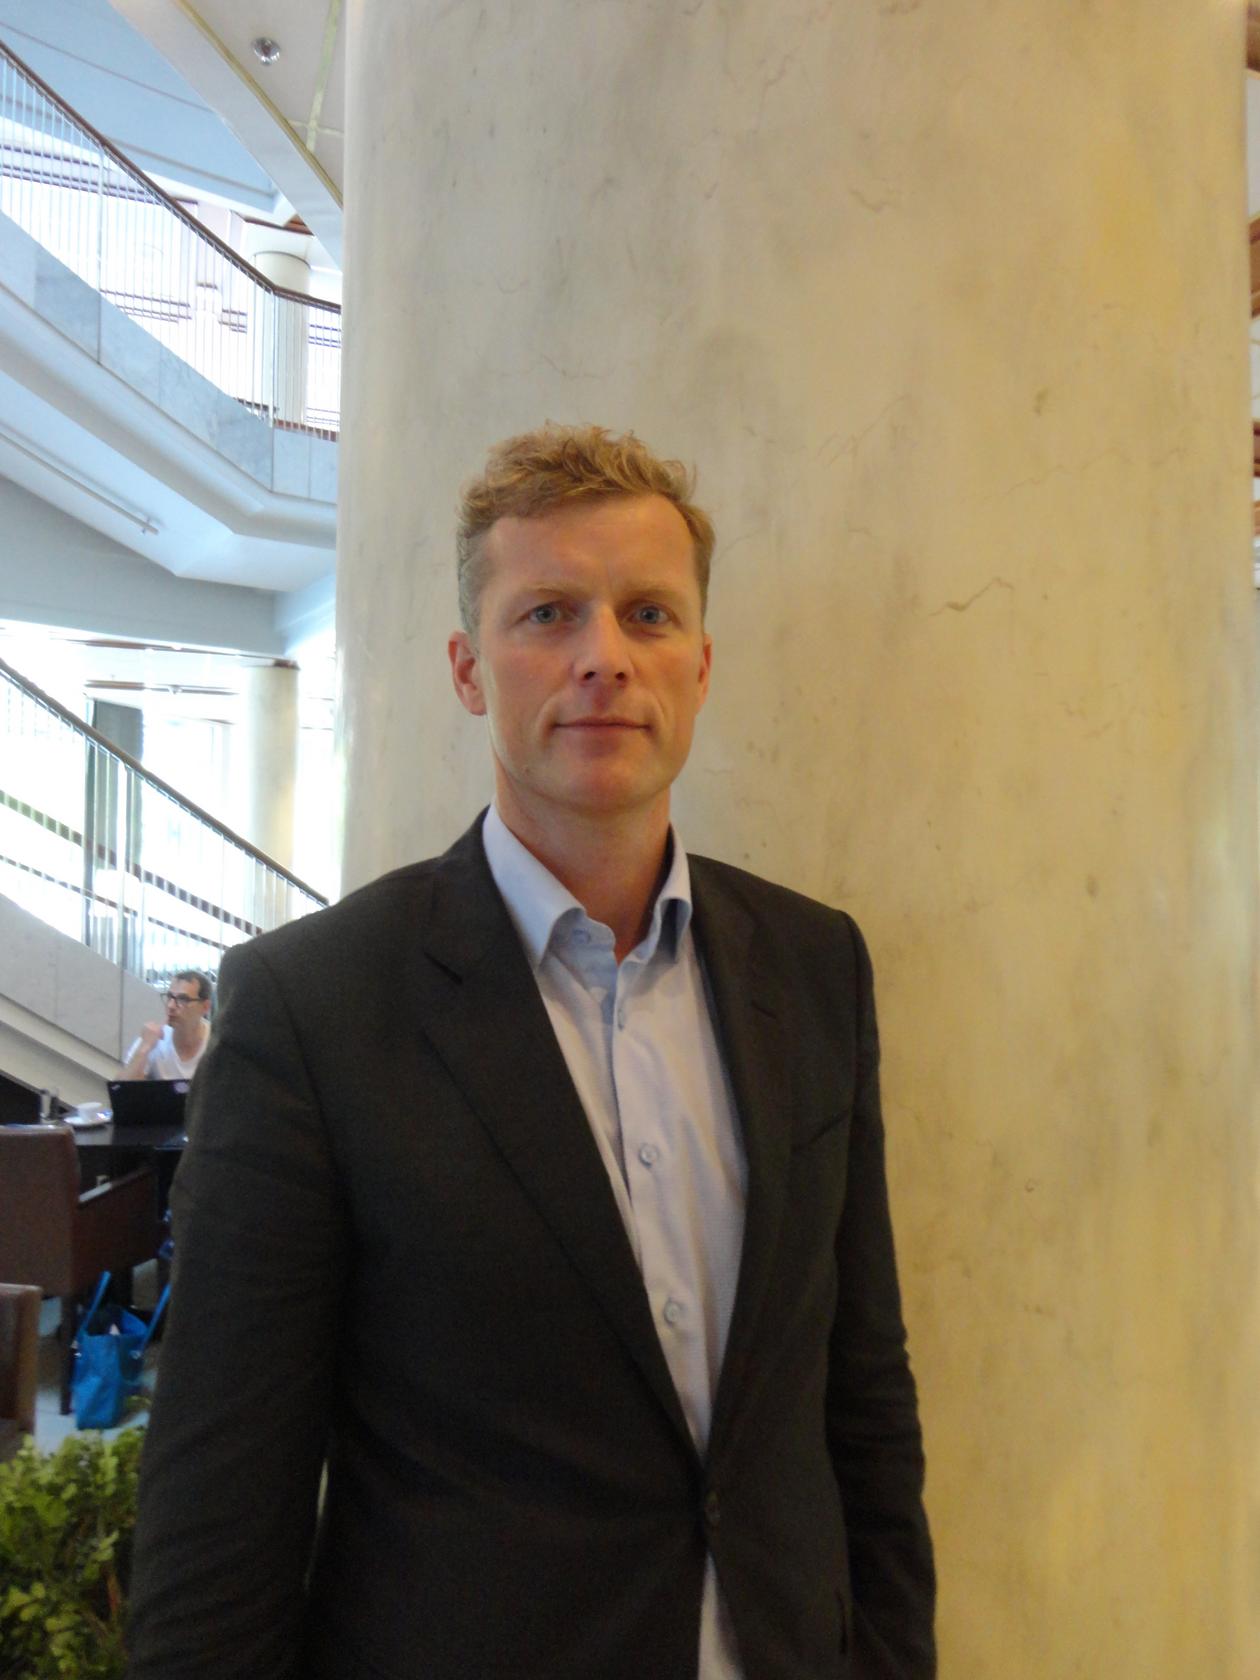 Bernt-Olav Røttingsnes,CEO